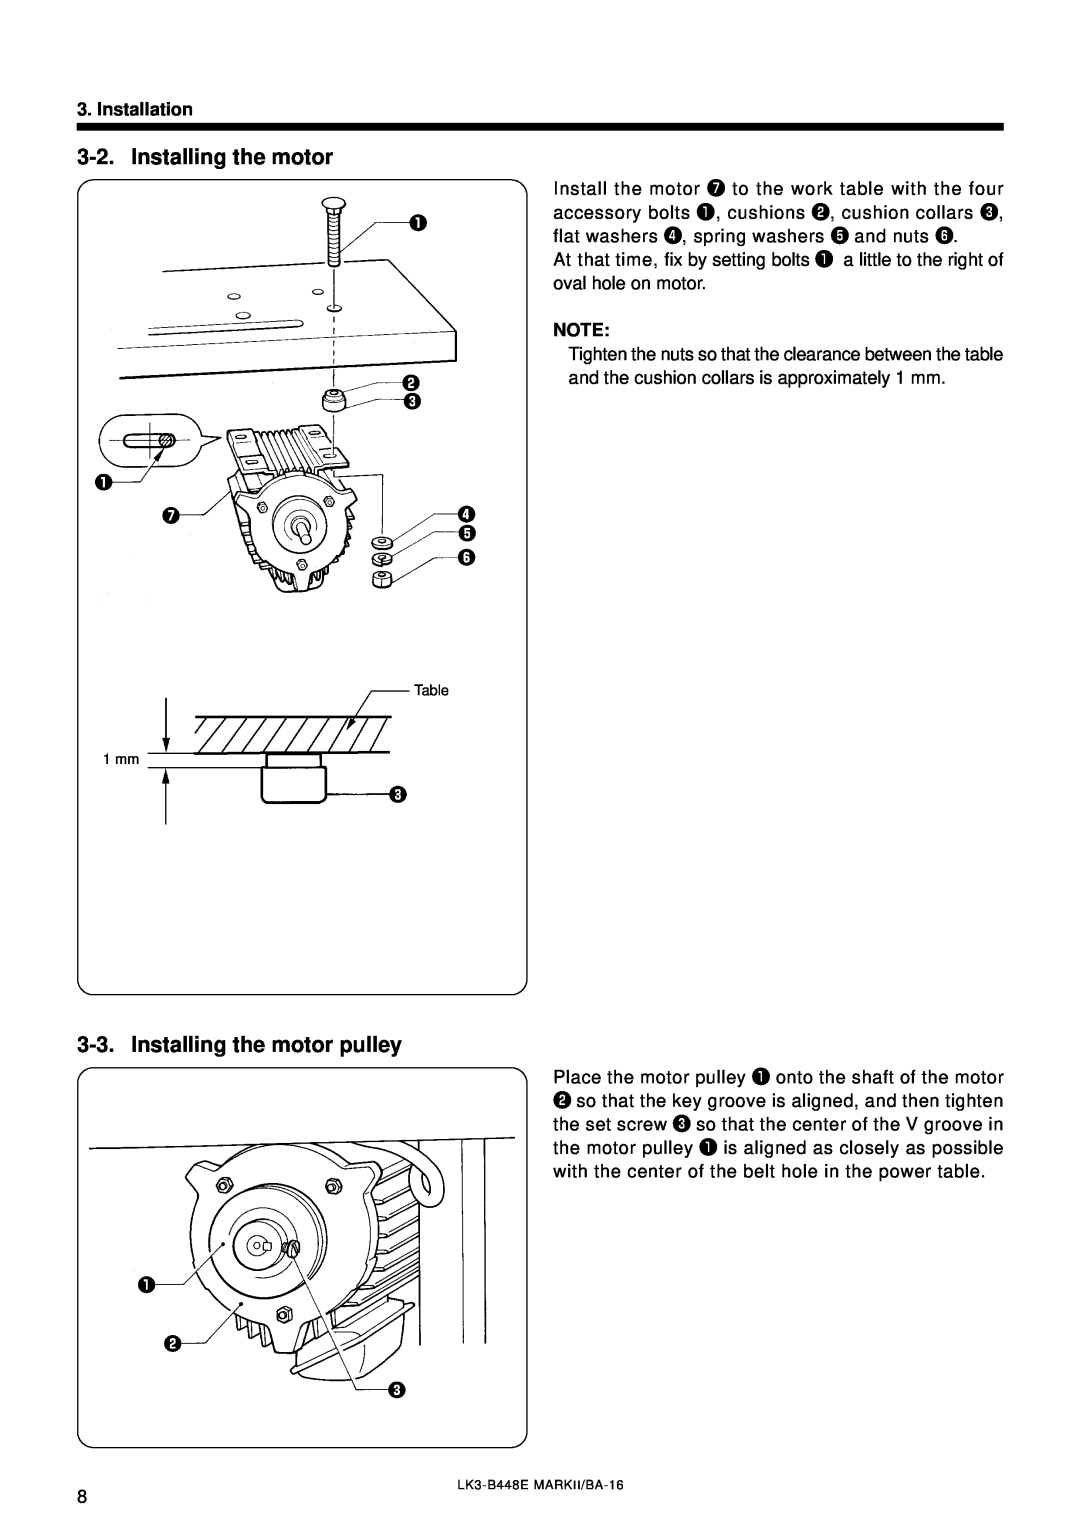 Brother LK3-B448E instruction manual Installing the motor pulley, Installation, 1 mm 